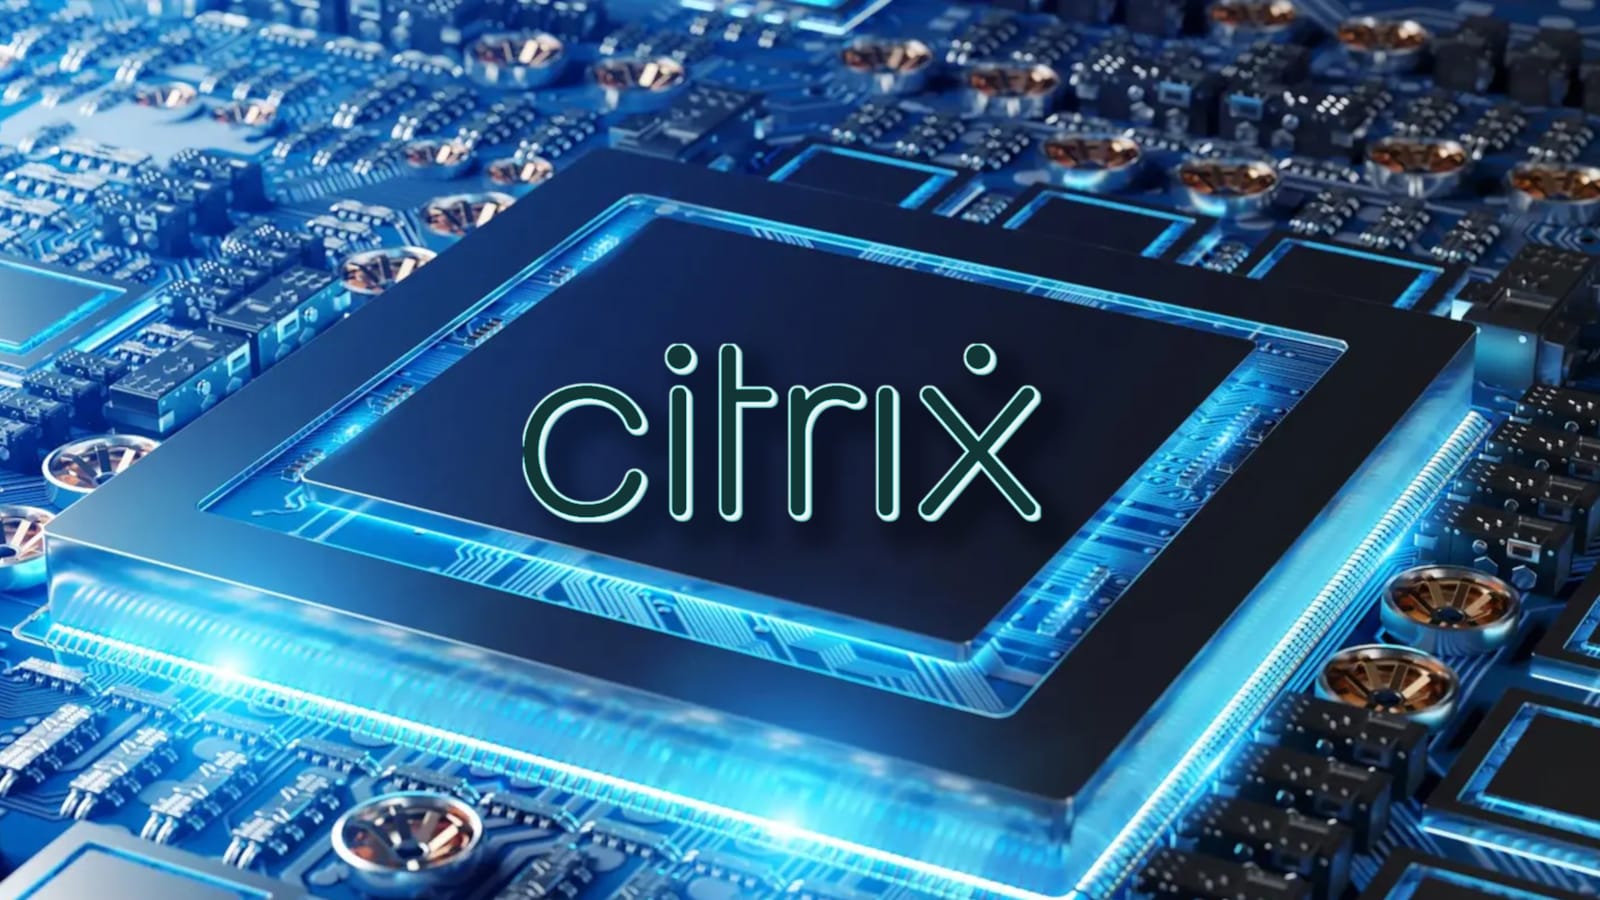 Citrix Hypervisor gets hotfix for new Reptar Intel CPU flaw